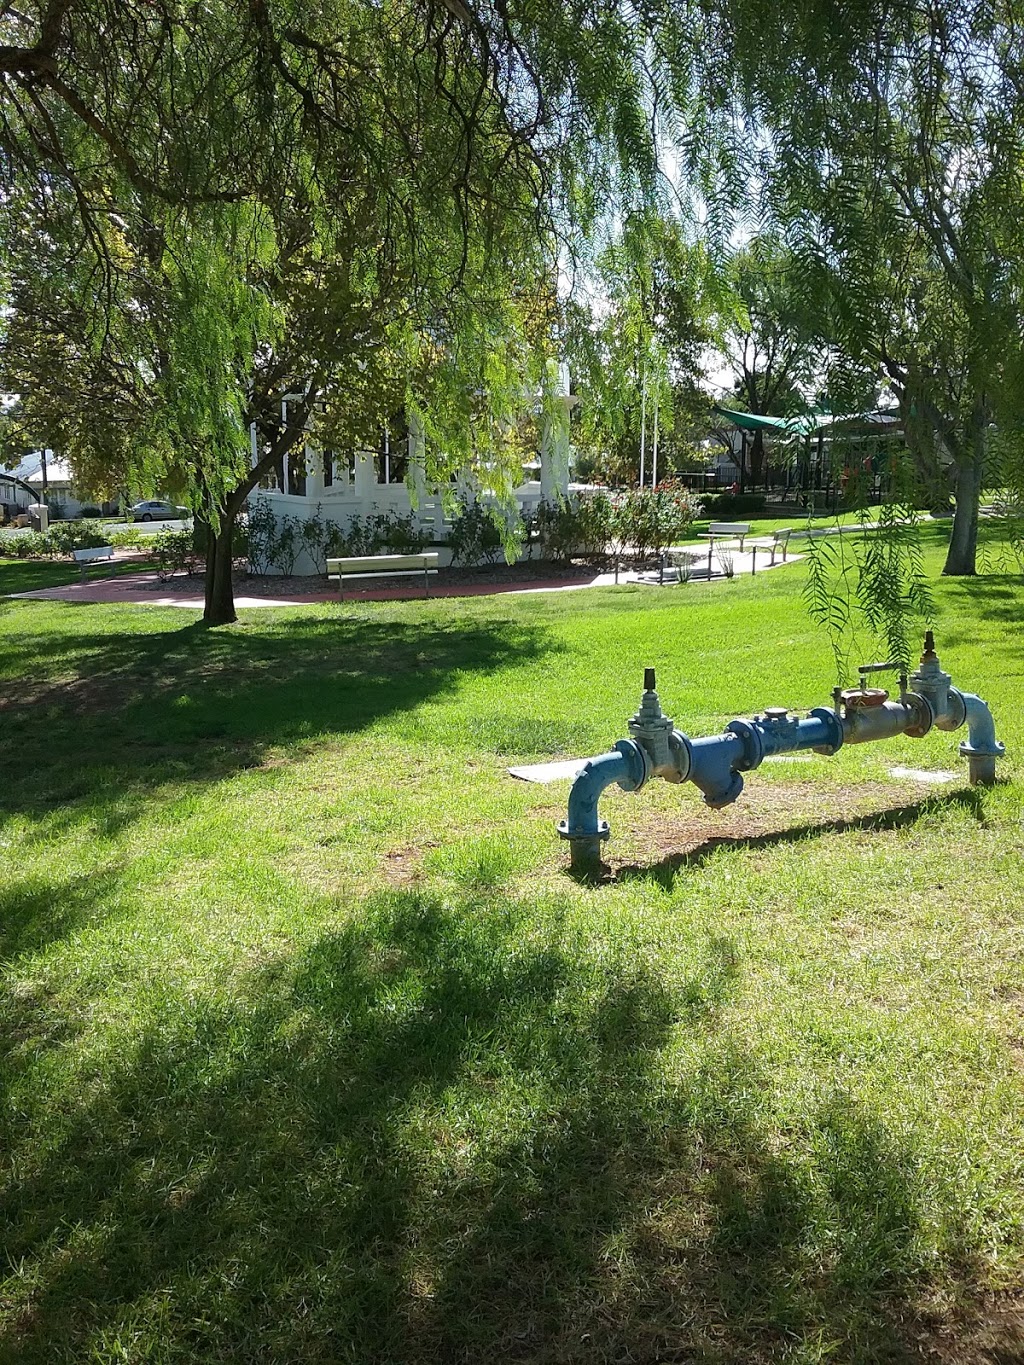 ANZAC Park | park | Gulgong NSW 2852, Australia